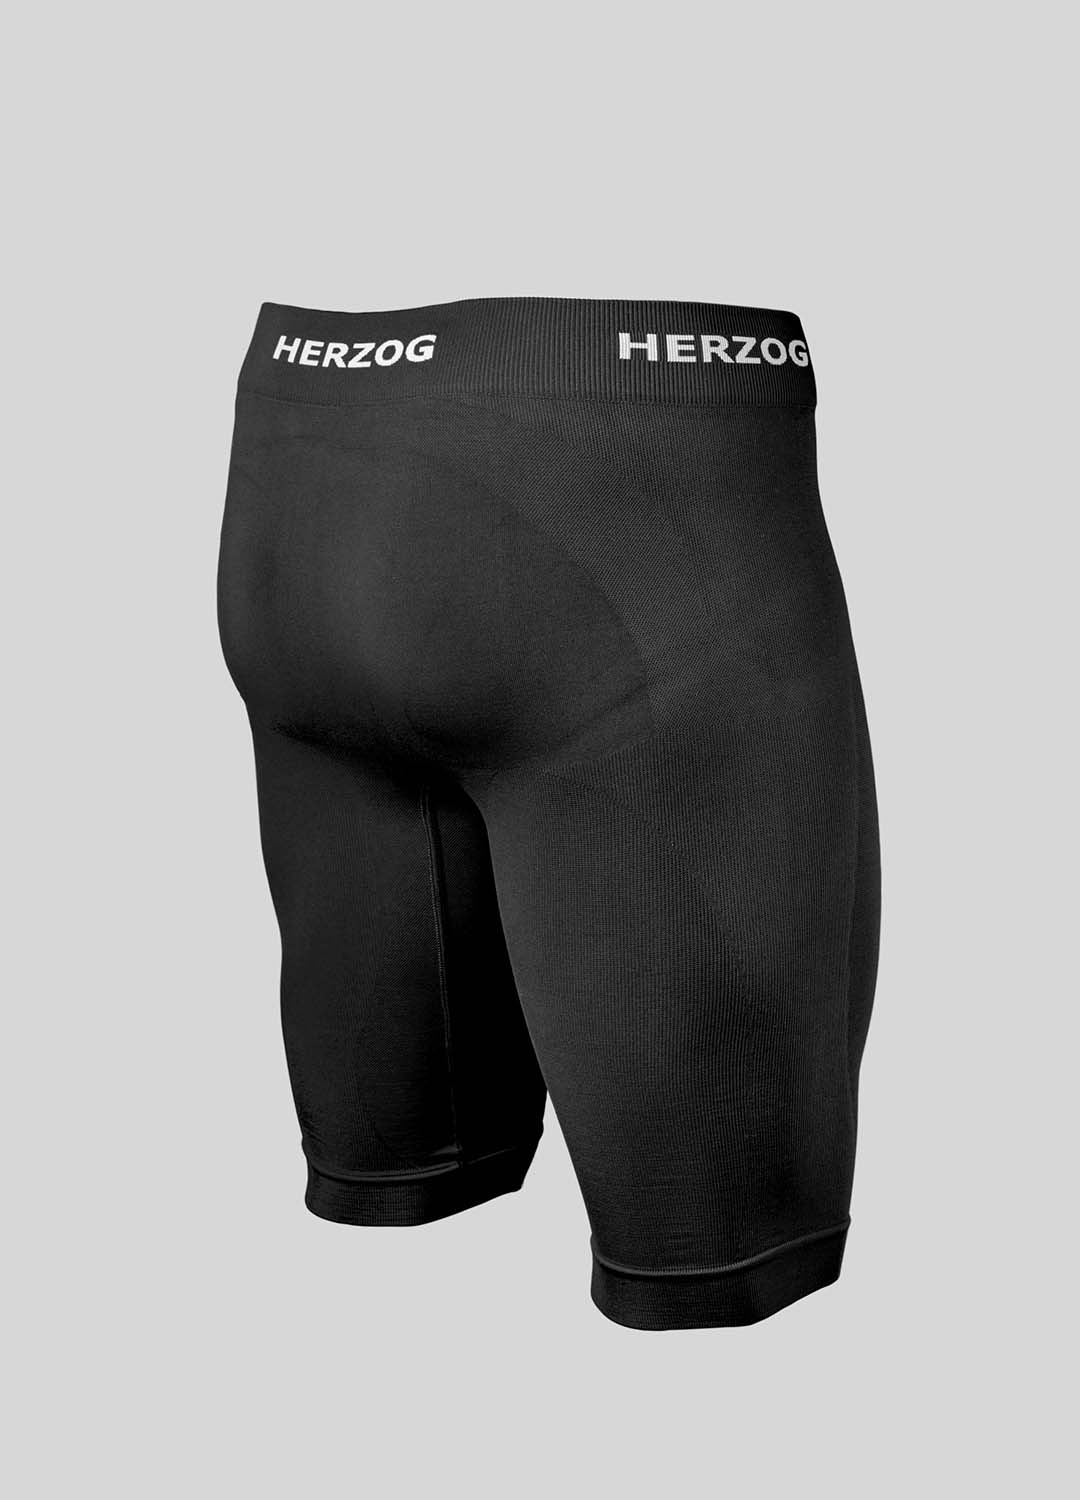 Shop your red Herzog PRO Sport Compression Shorts